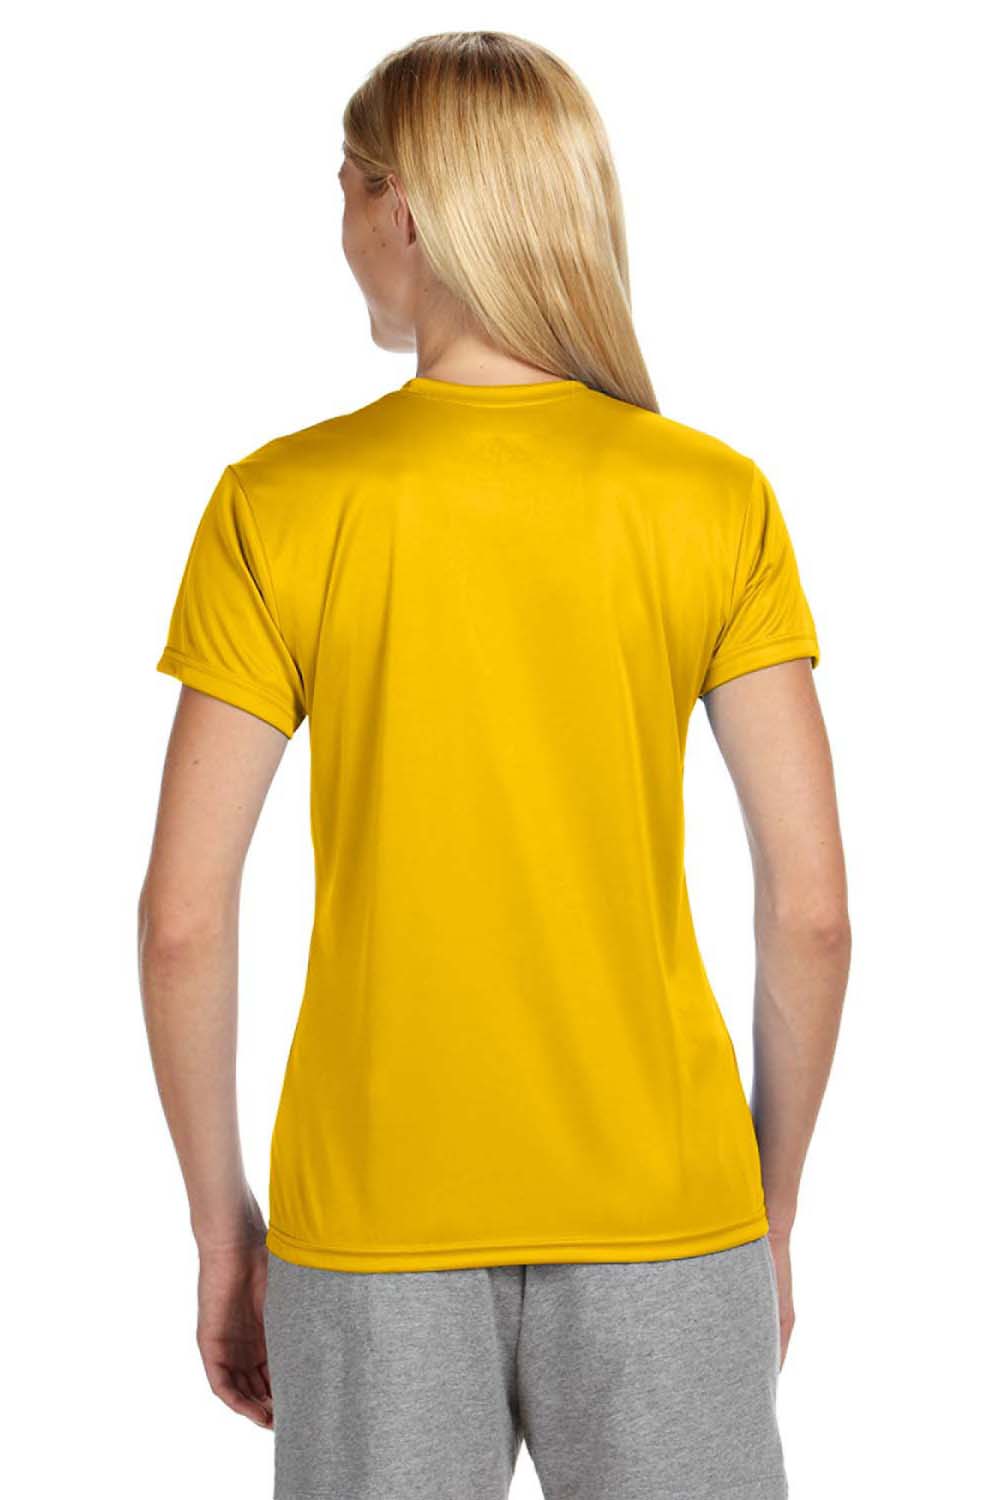 A4 NW3201 Womens Performance Moisture Wicking Short Sleeve Crewneck T-Shirt Gold Model Back